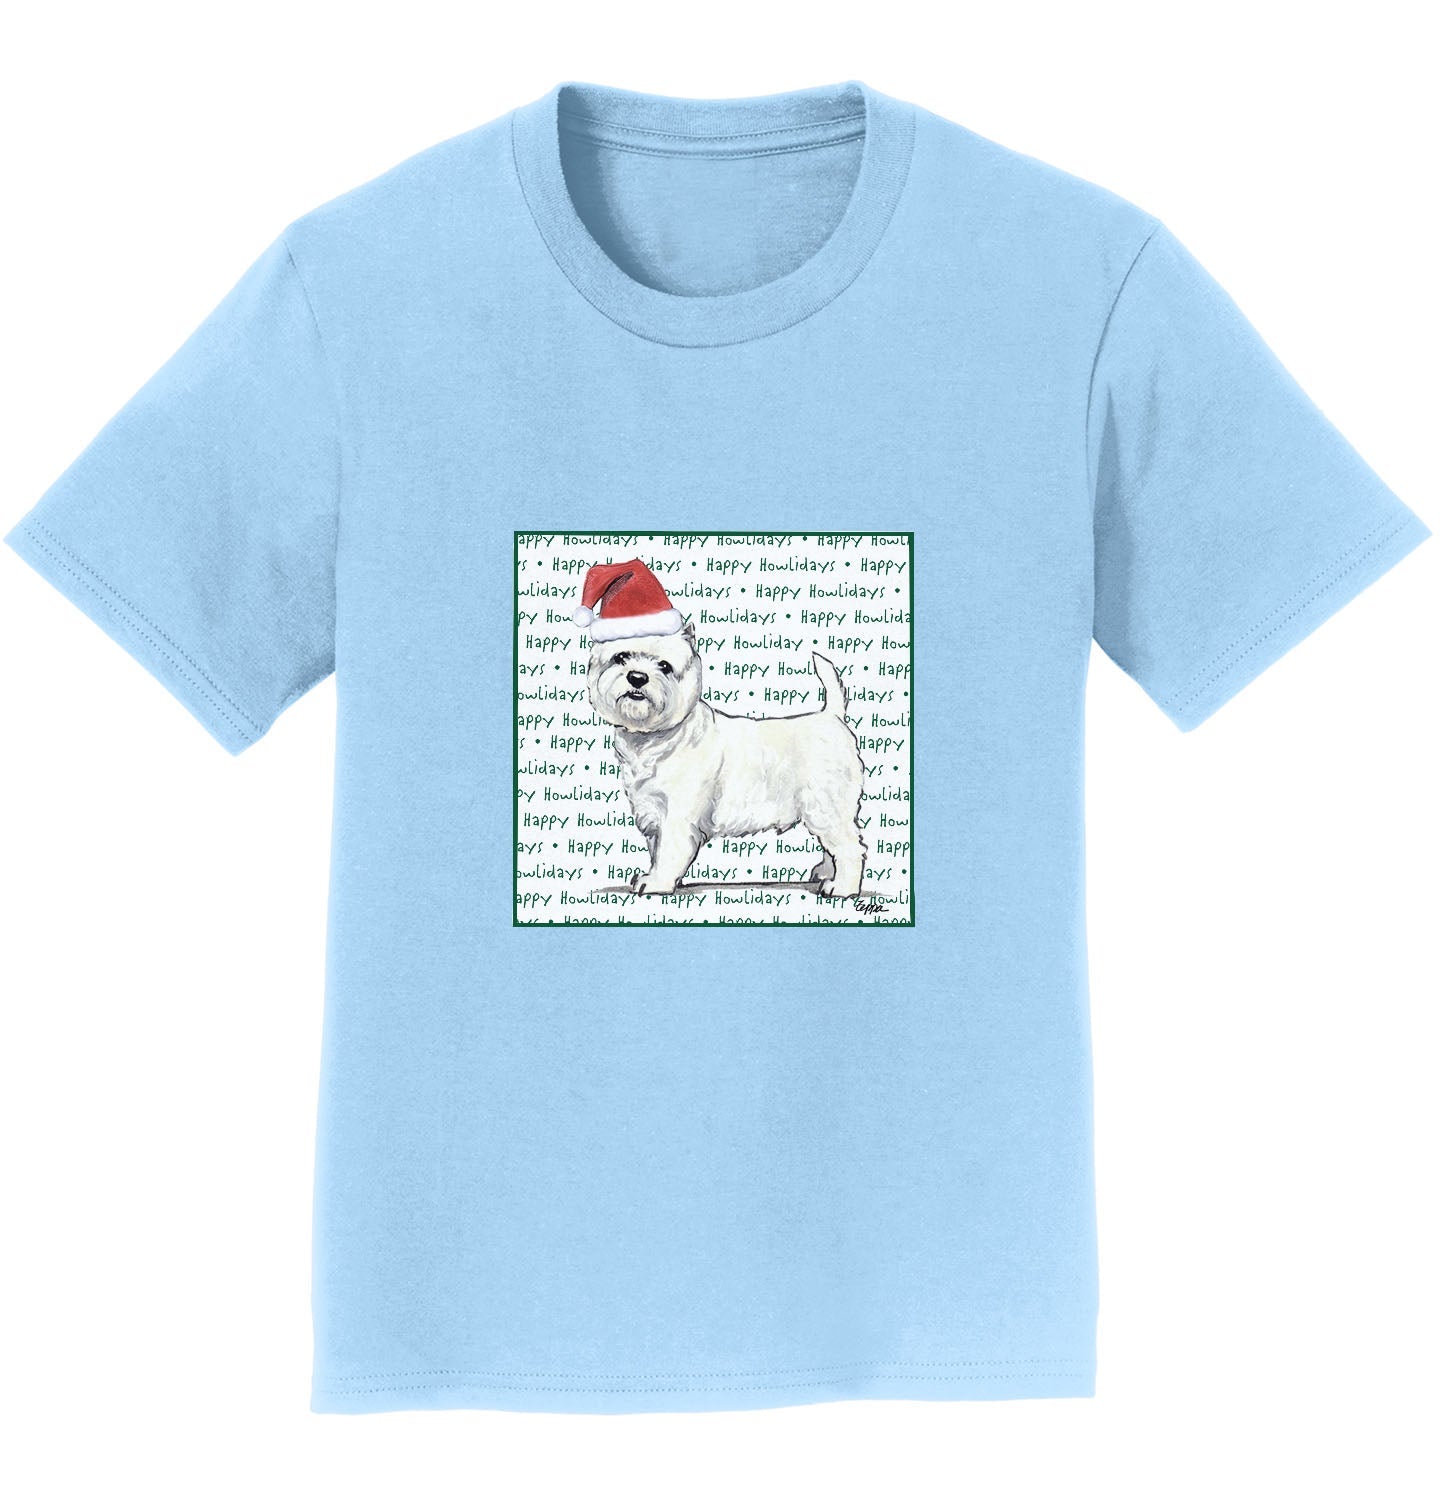 West Highland White Terrier Happy Howlidays Text - Kids' Unisex T-Shirt